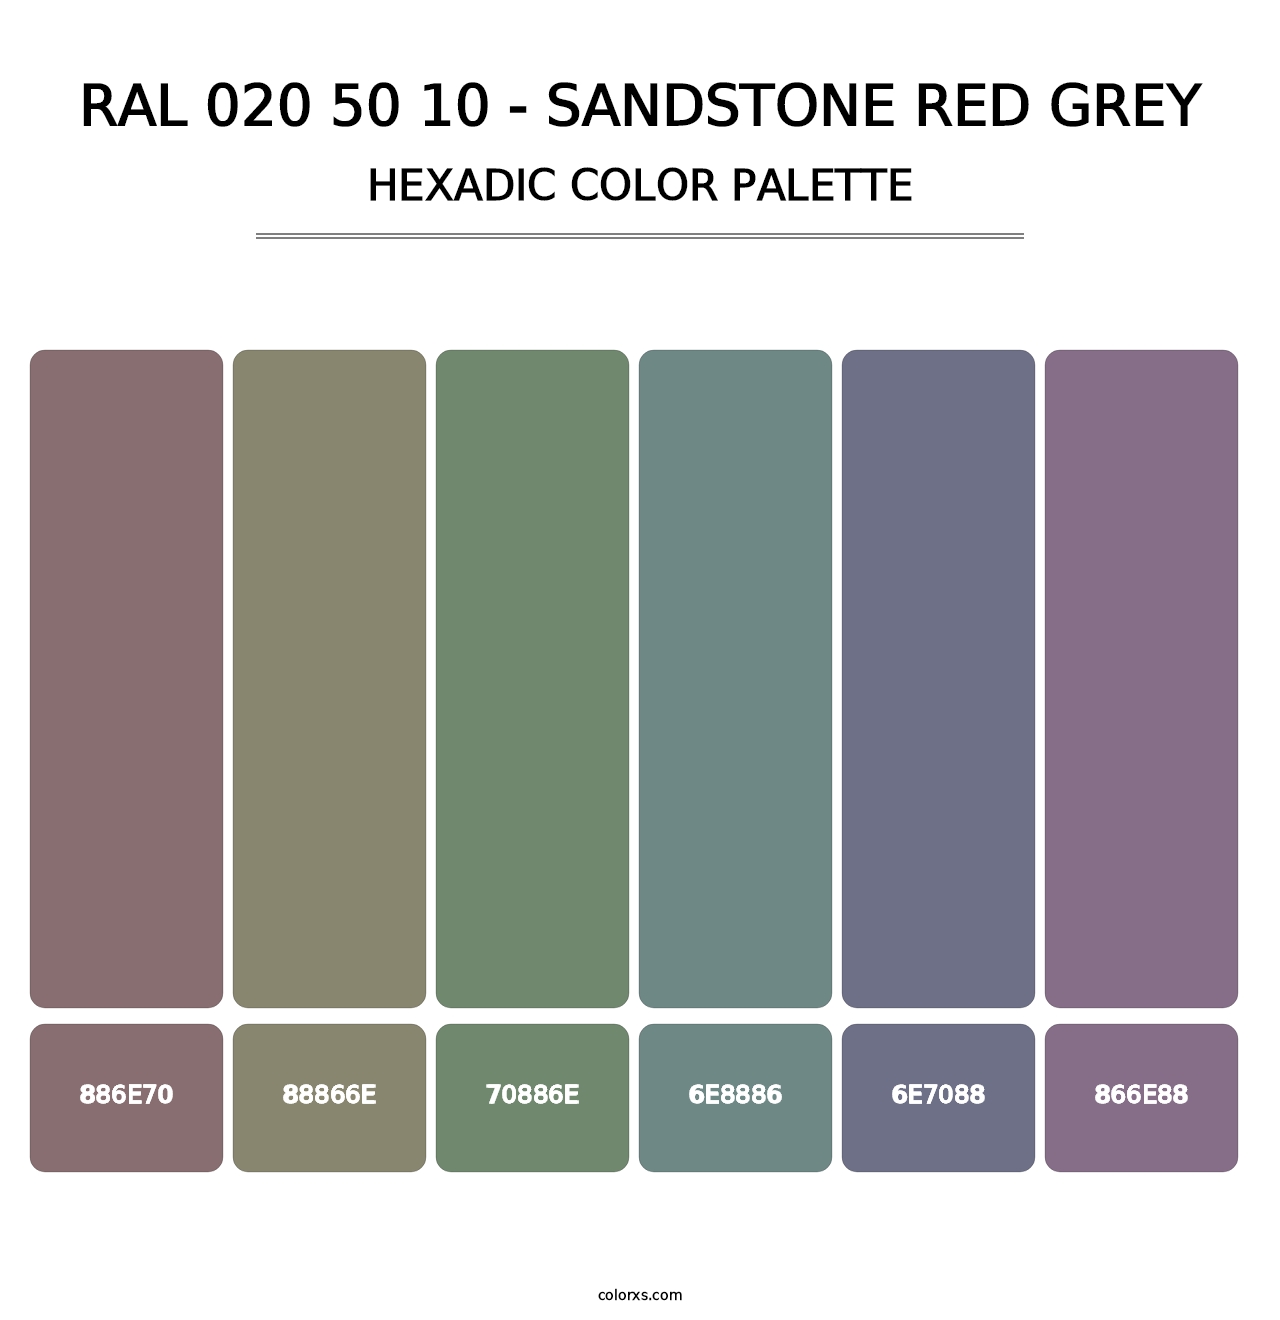 RAL 020 50 10 - Sandstone Red Grey - Hexadic Color Palette